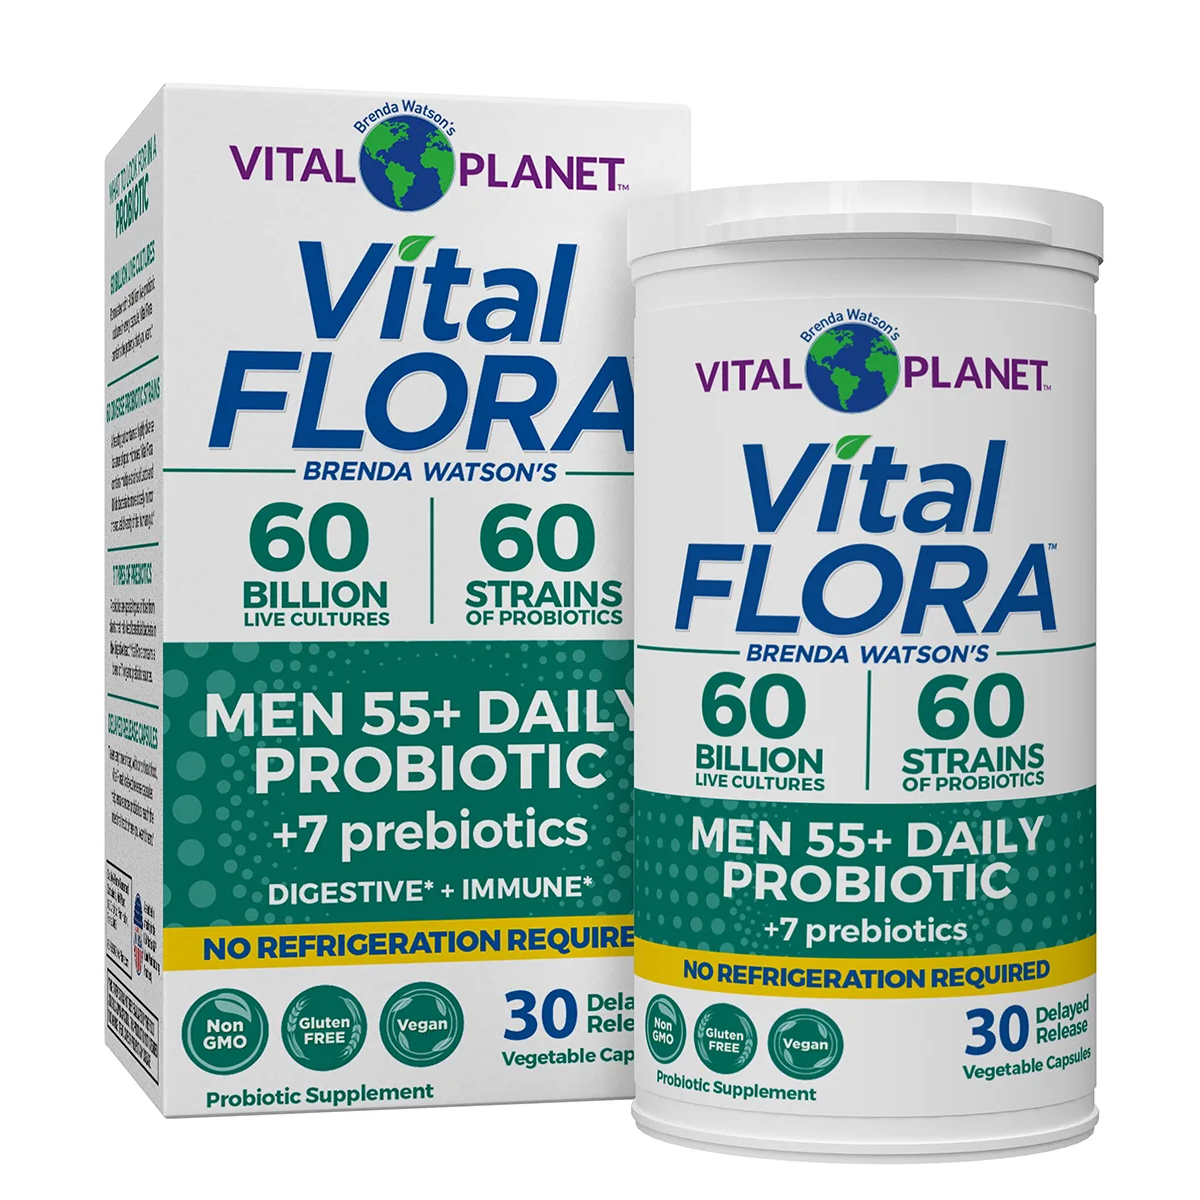 Vital Flora Men’s 55+ Daily Probiotic - Vital Planet